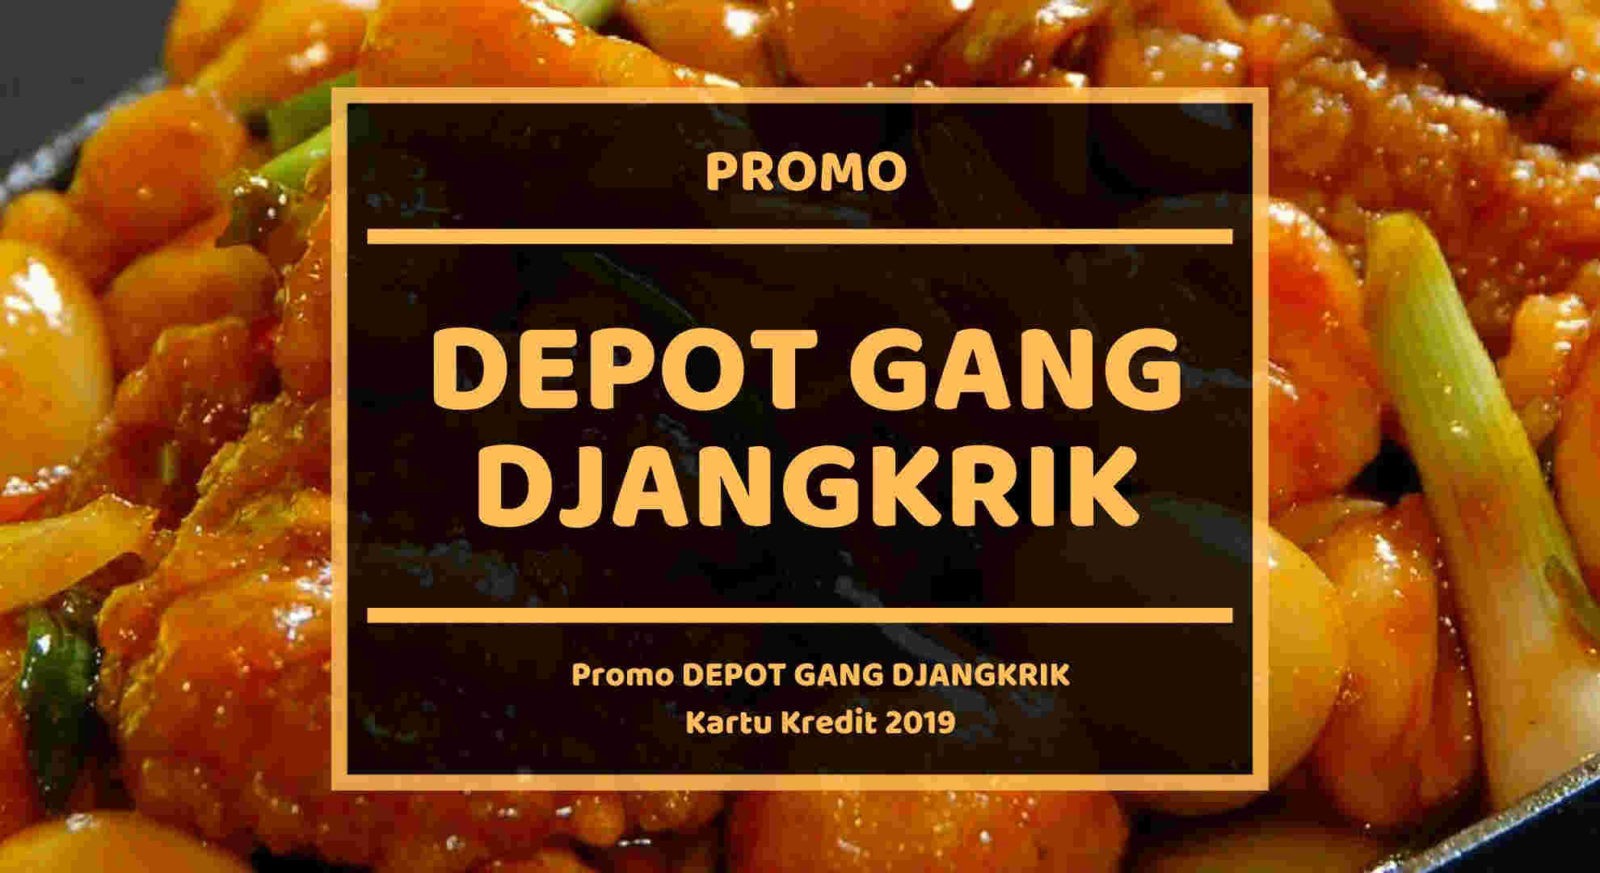 Promo Depot Gang Djangkrik